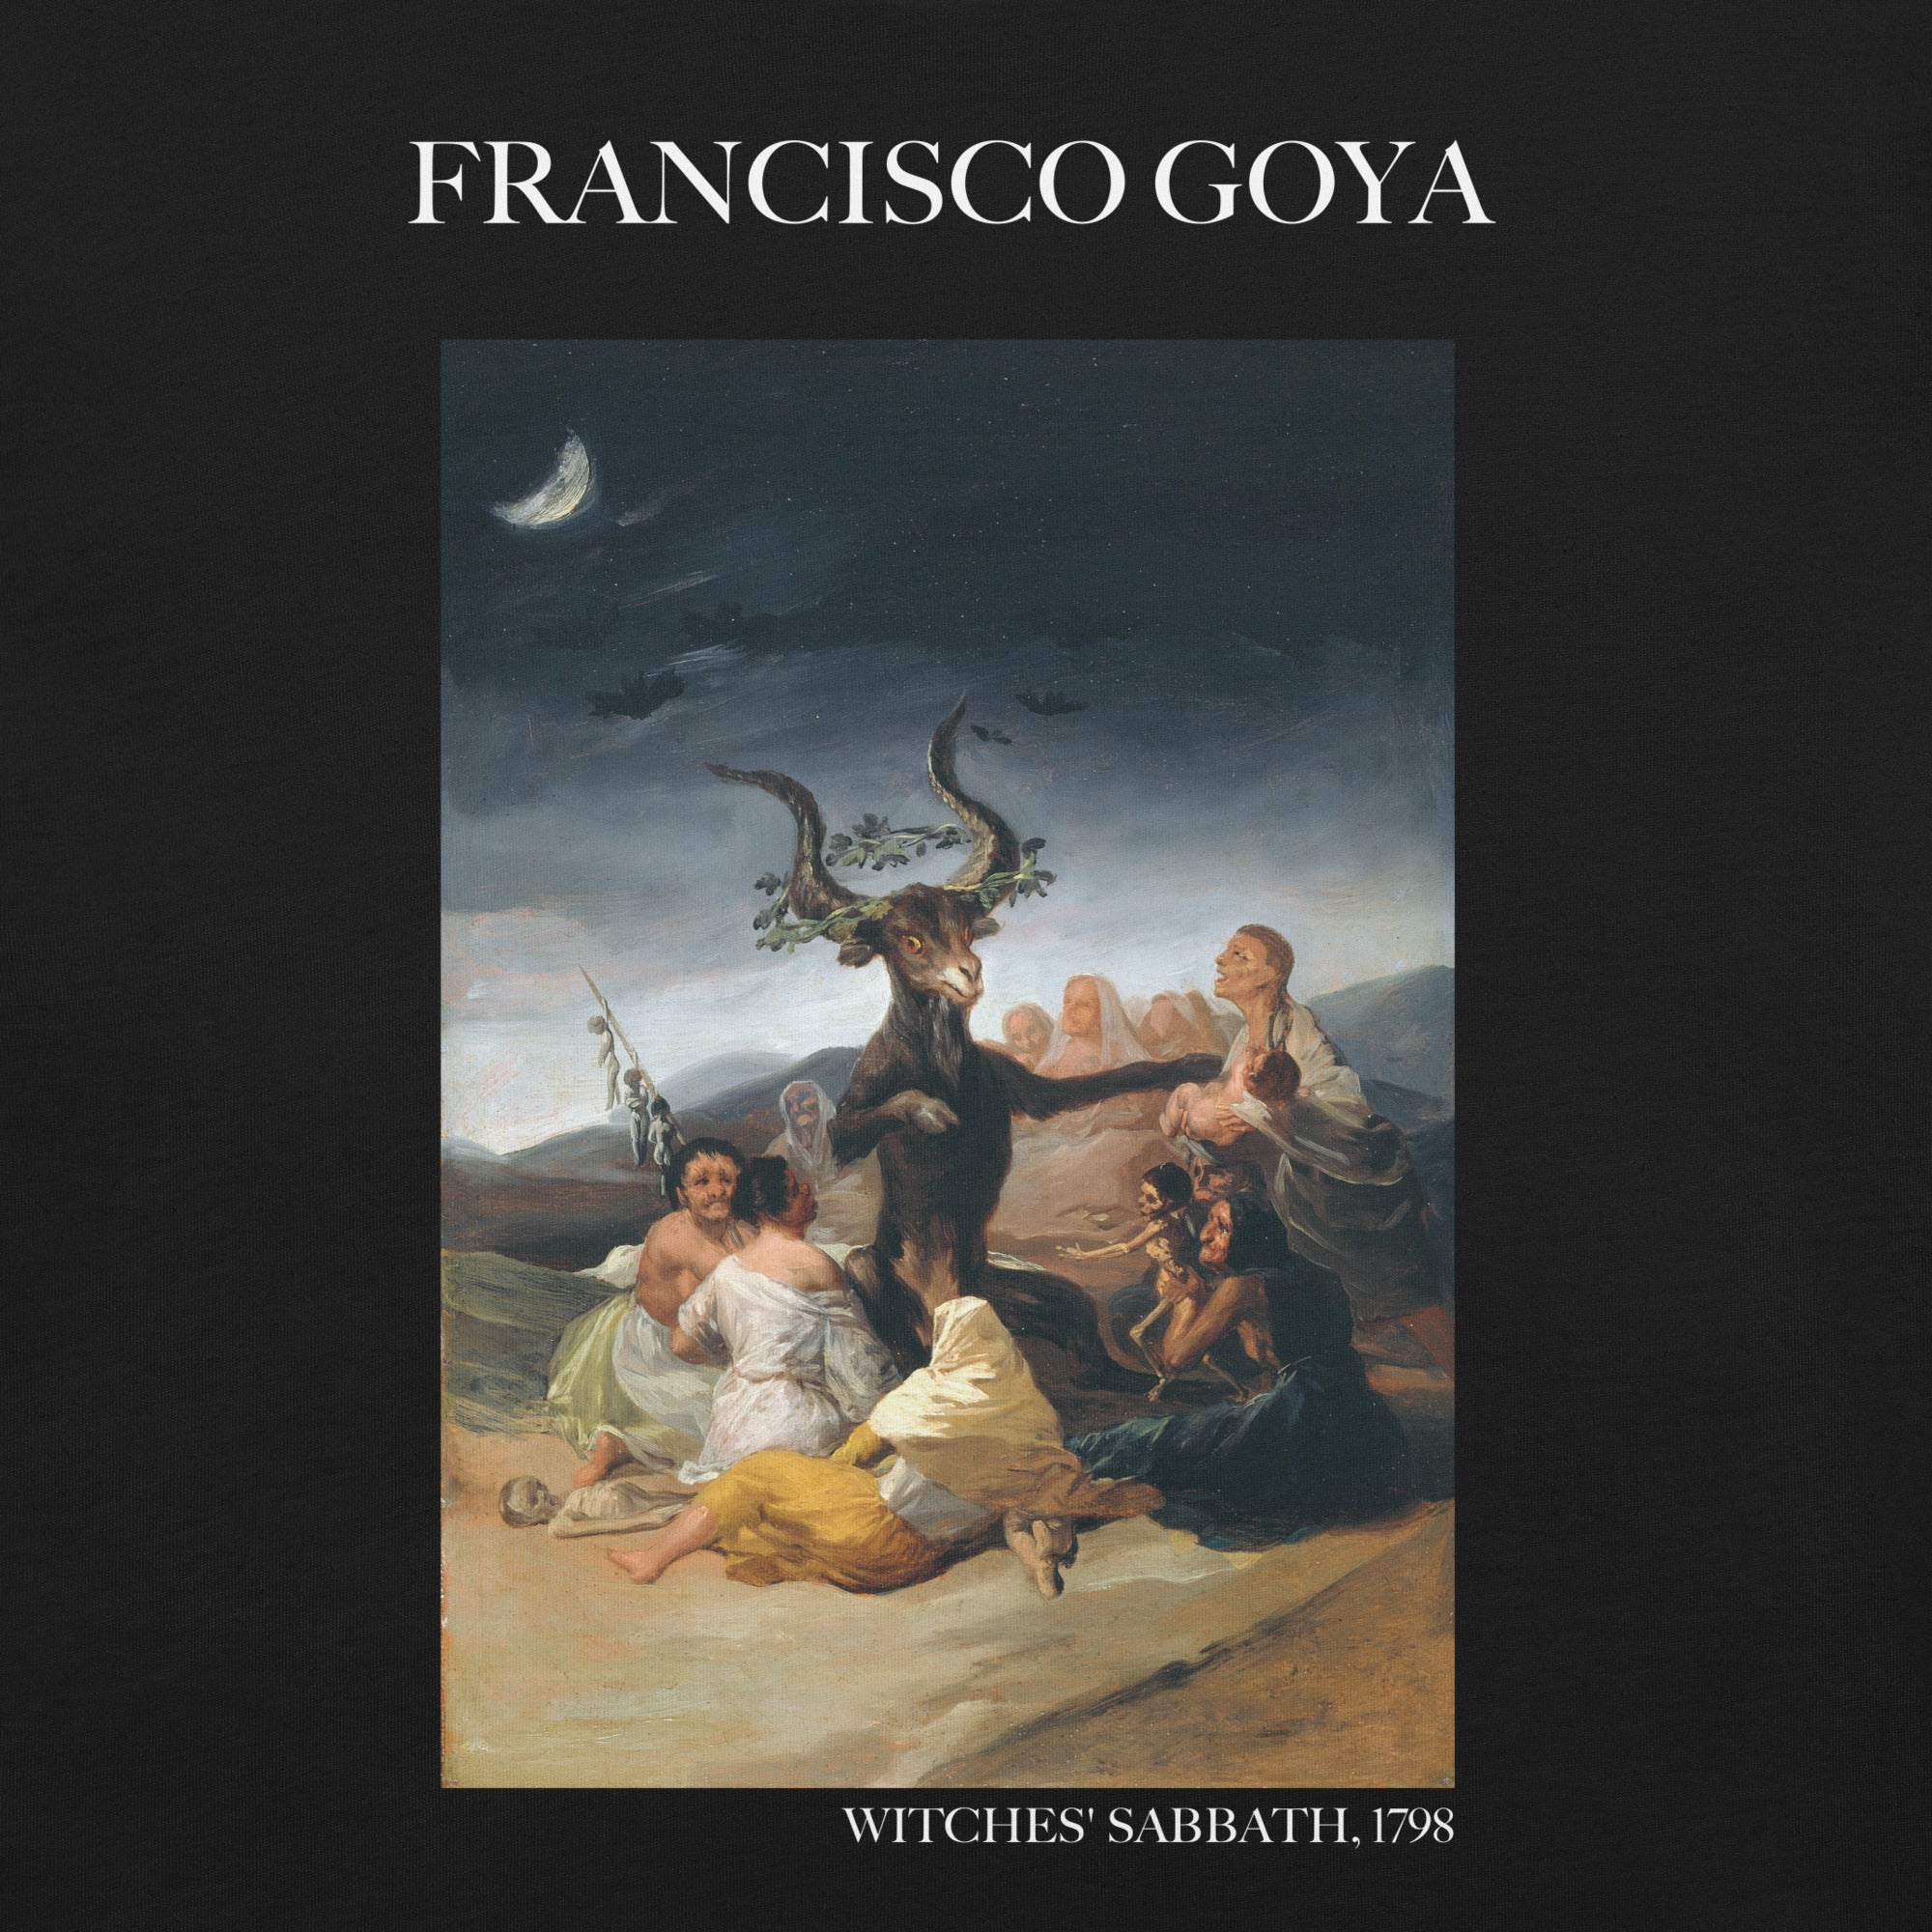 Francisco Goya 'Witches' Sabbath' Famous Painting T-Shirt | Unisex Classic Art Tee